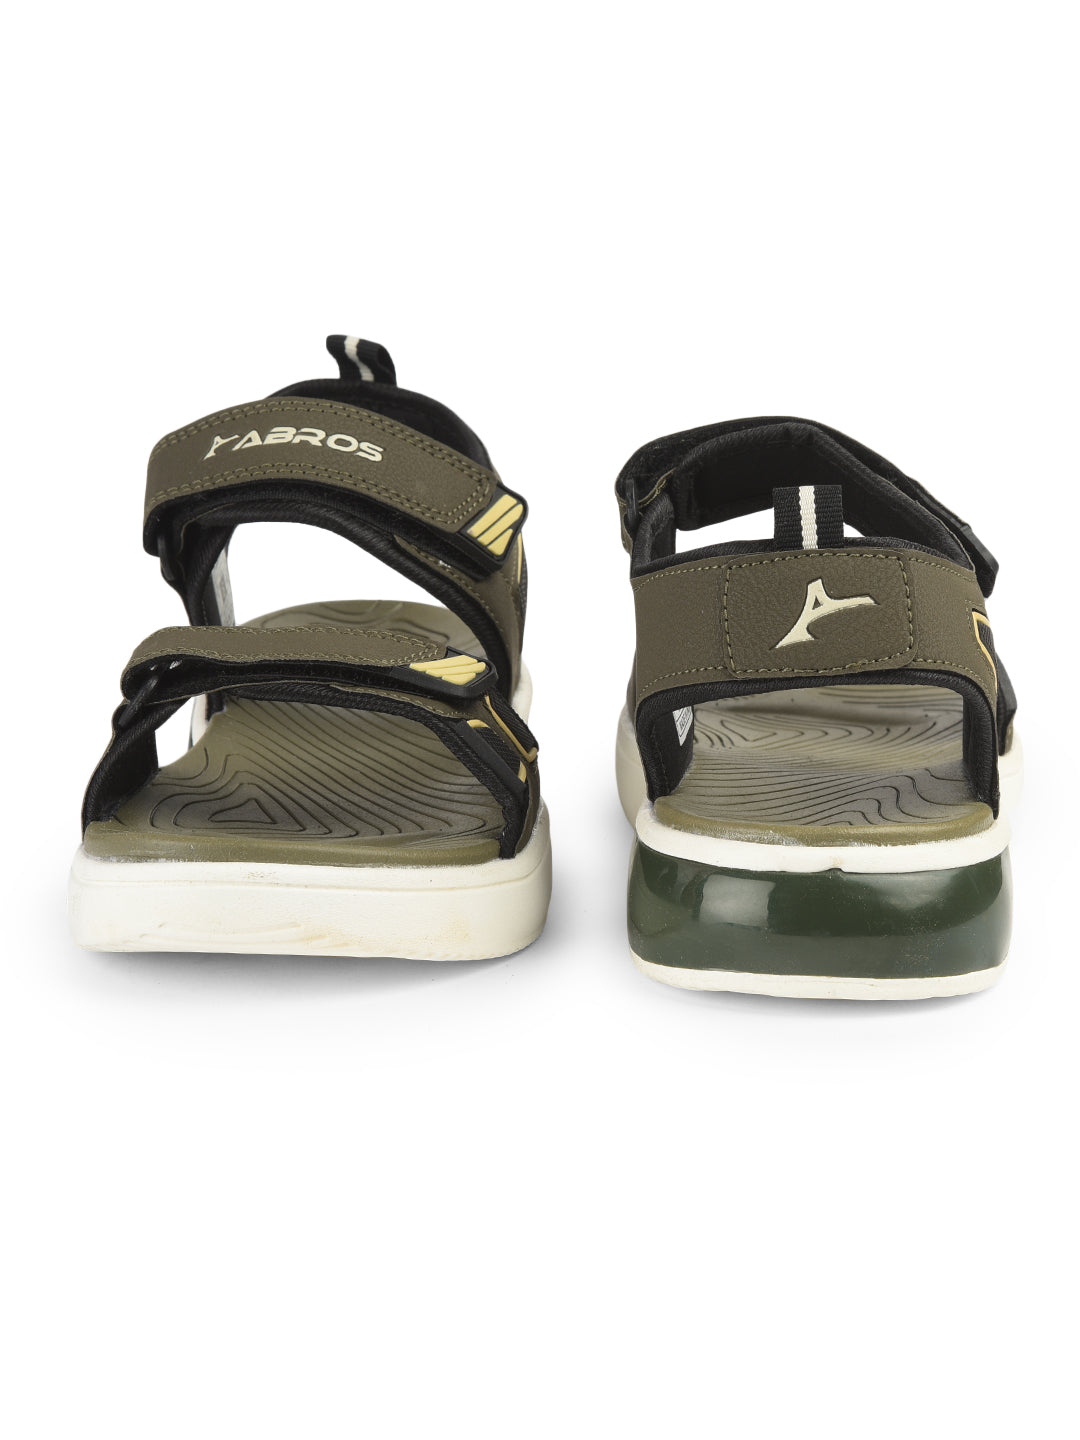 Fsports Atlas Men Grey, Green Sports Sandals - Buy Grey, Green Color Fsports  Atlas Men Grey, Green Sports Sandals Online at Best Price - Shop Online for  Footwears in India | Flipkart.com